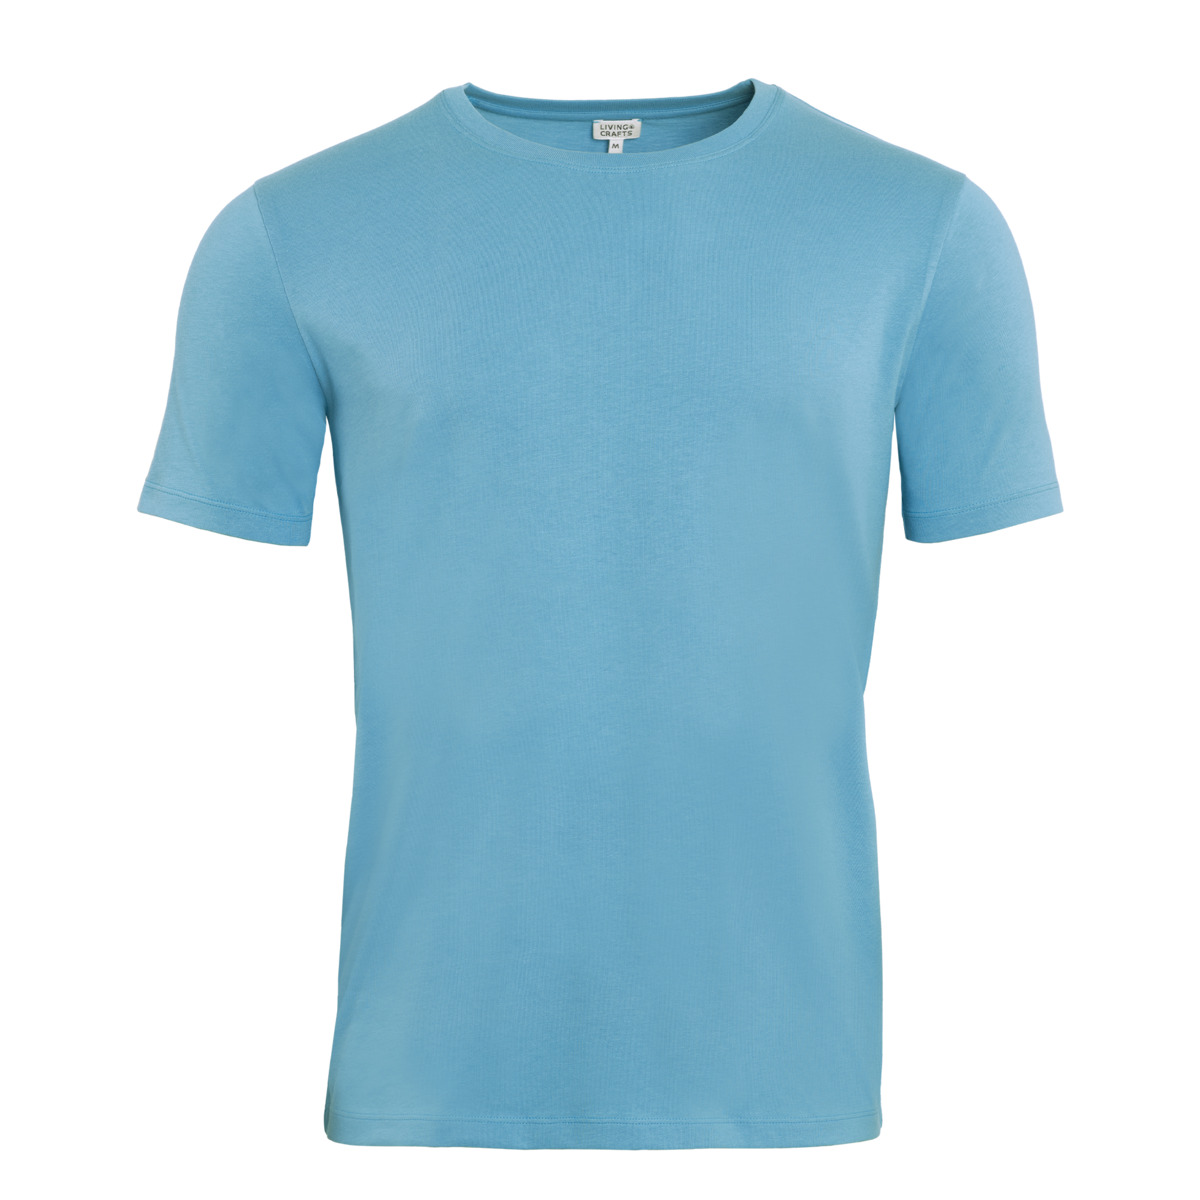 Blue T-shirt, ILKO